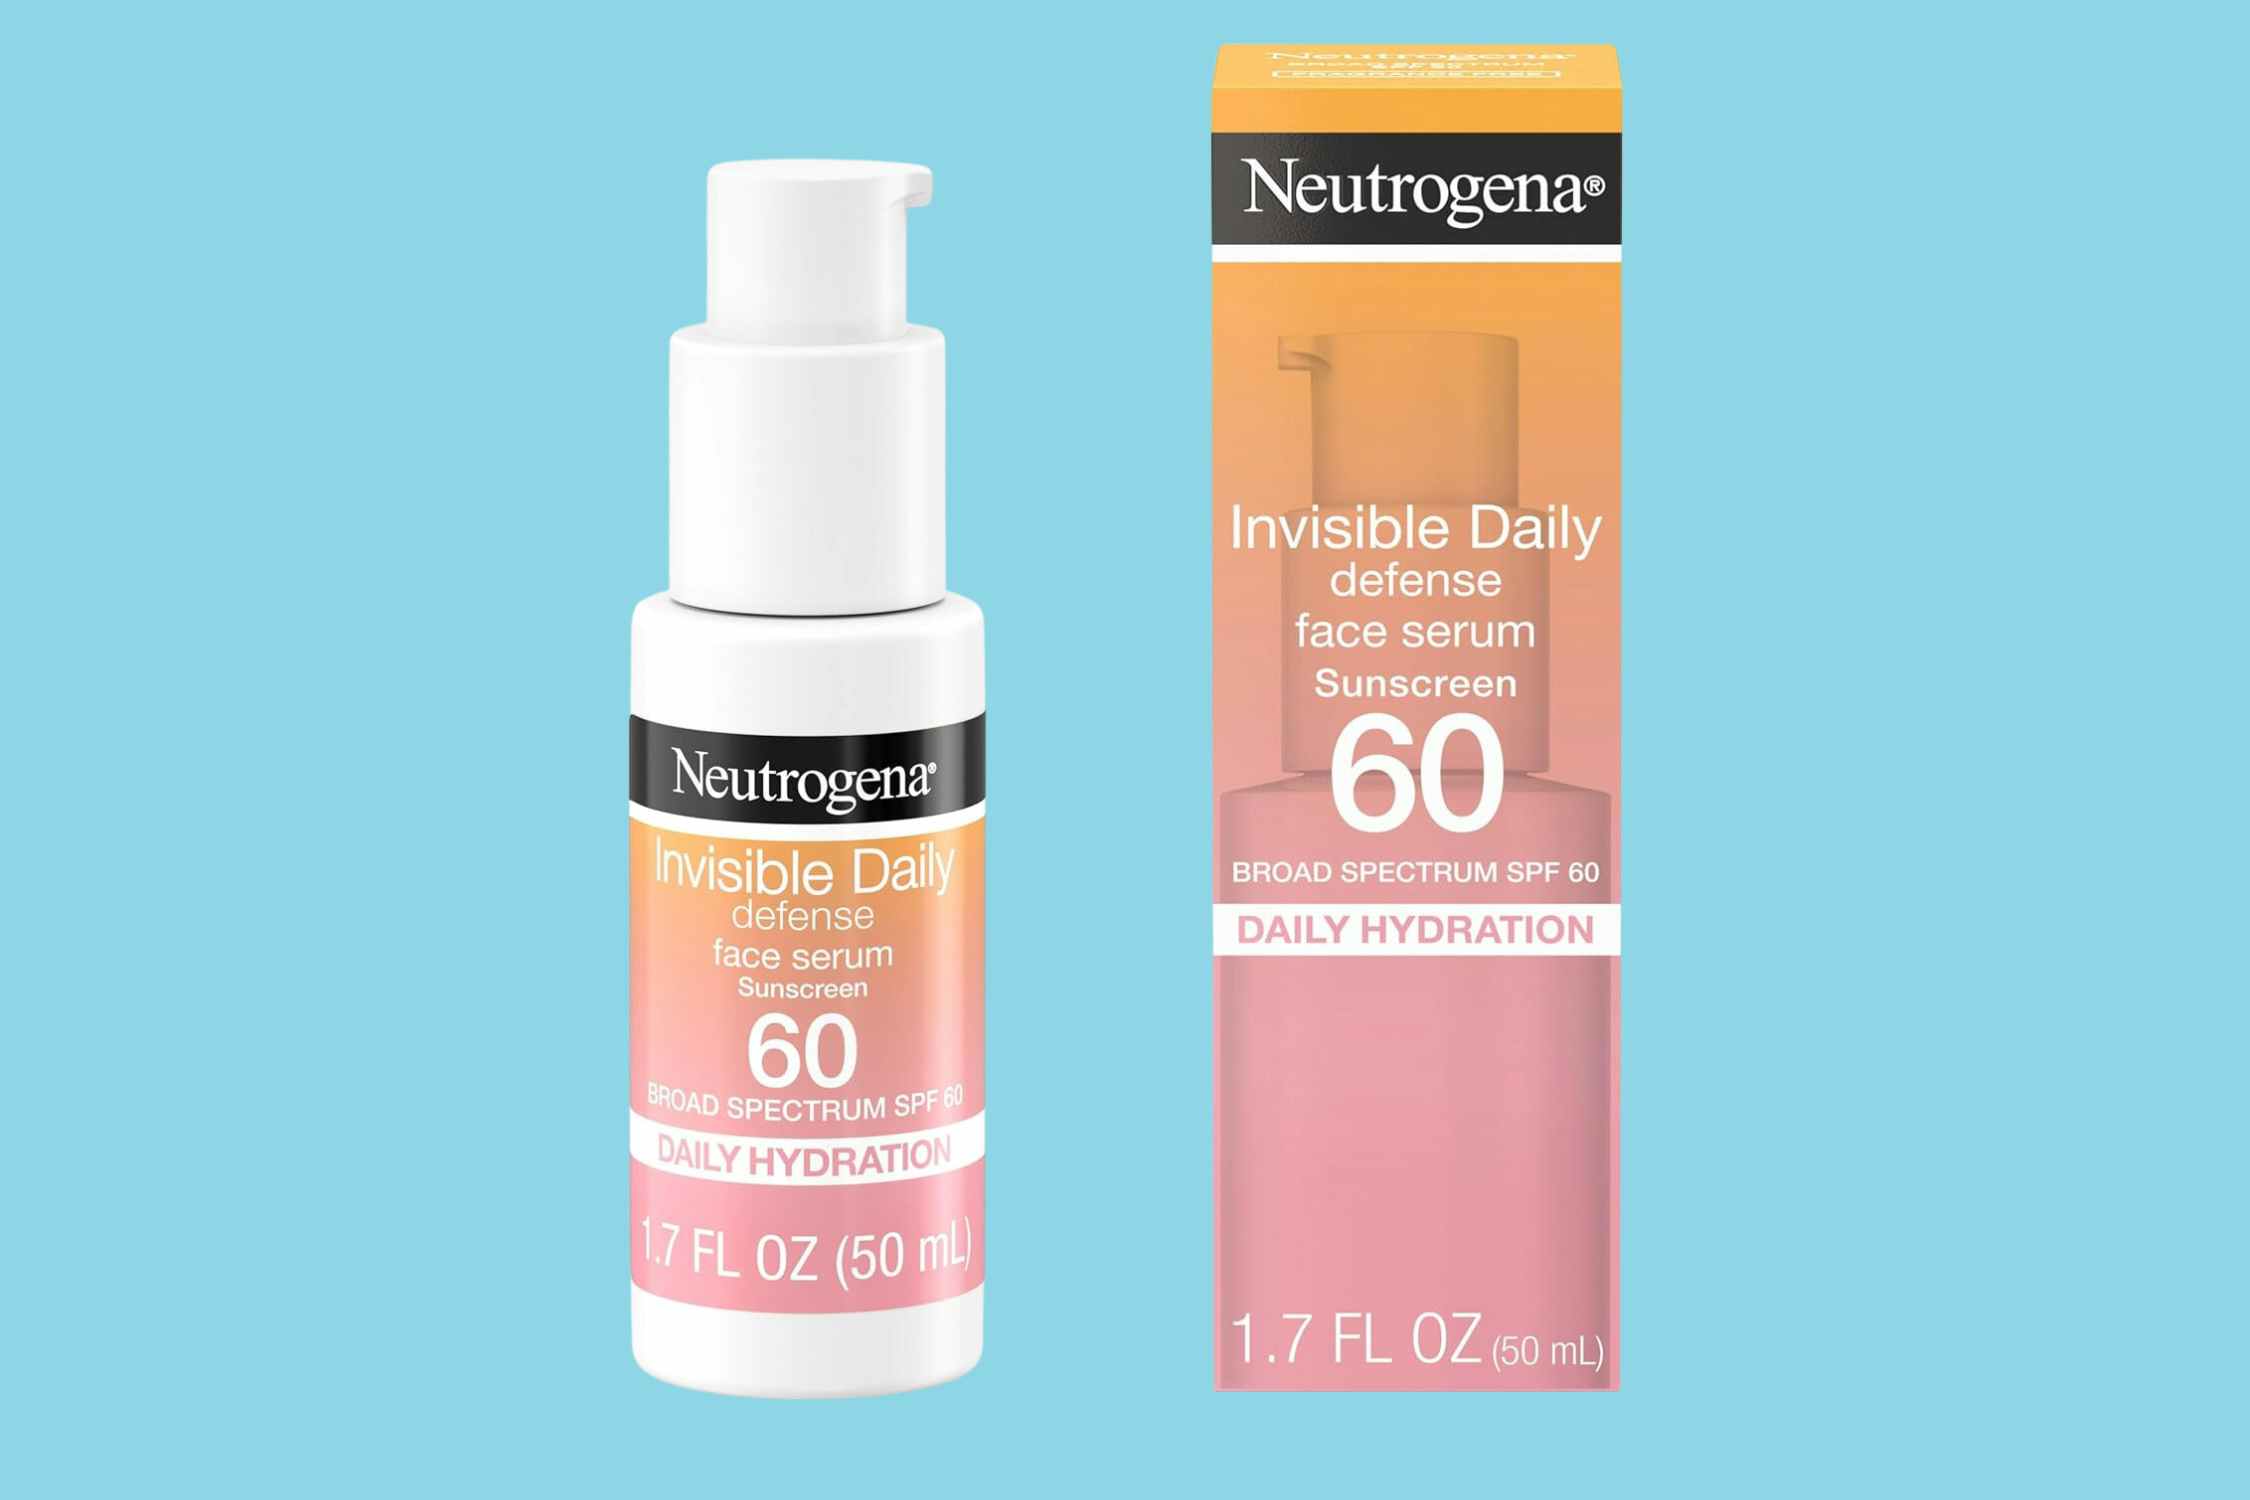 Neutrogena Facial Sunscreen Serum, as Low as $7.55 on Amazon